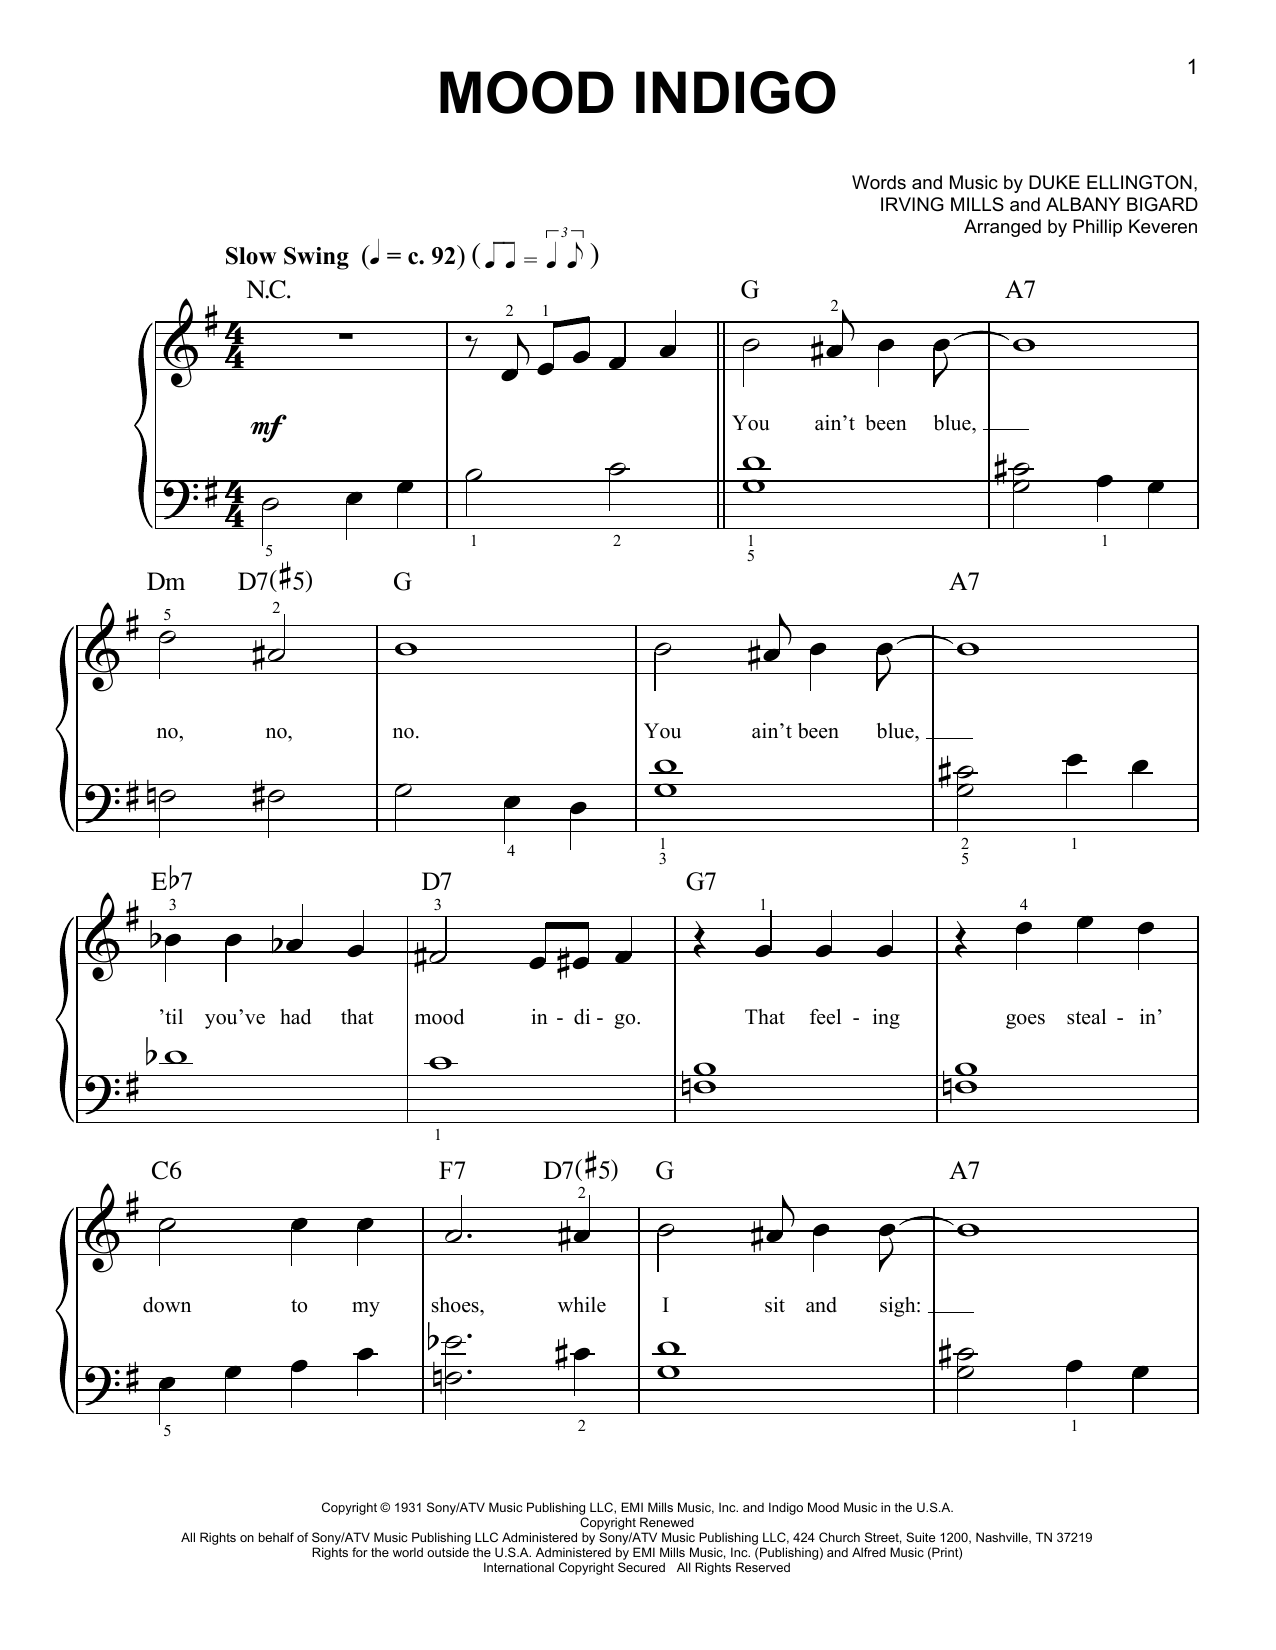 Duke Ellington Mood Indigo (arr. Phillip Keveren) Sheet Music Notes & Chords for Easy Piano - Download or Print PDF